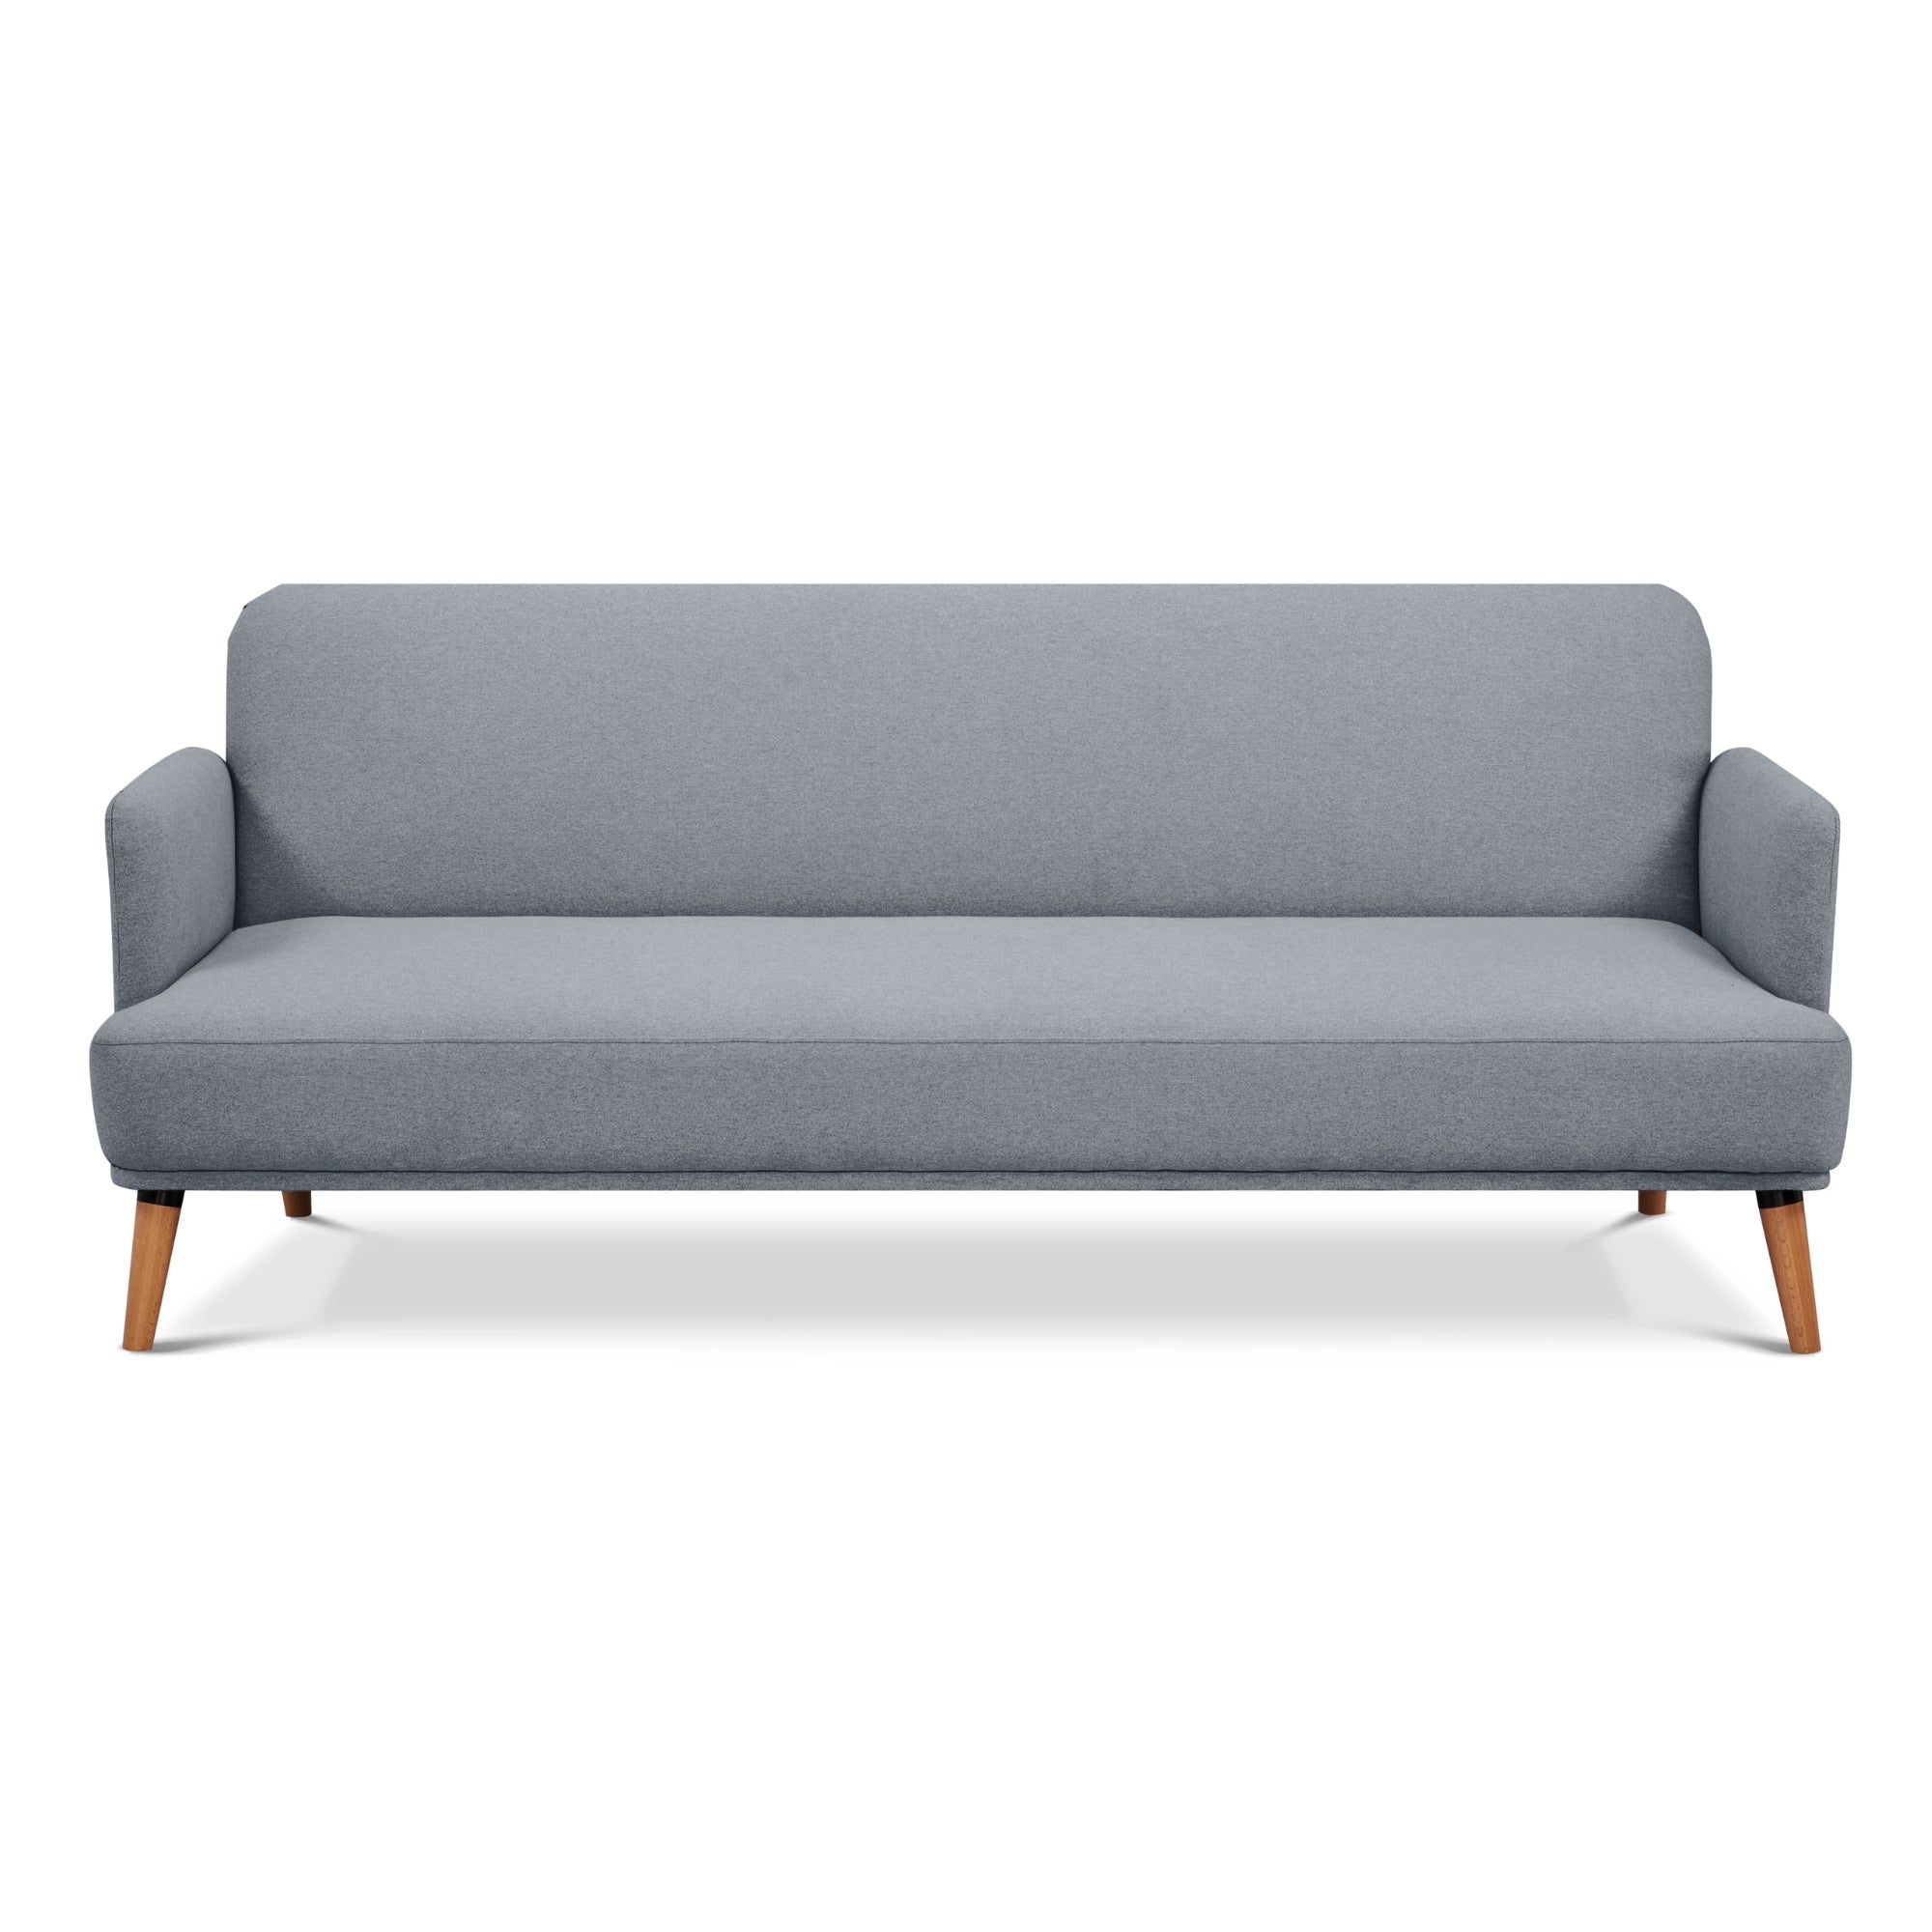 Light Grey 3-Seater Sofa Bed, High-Performance Fabric